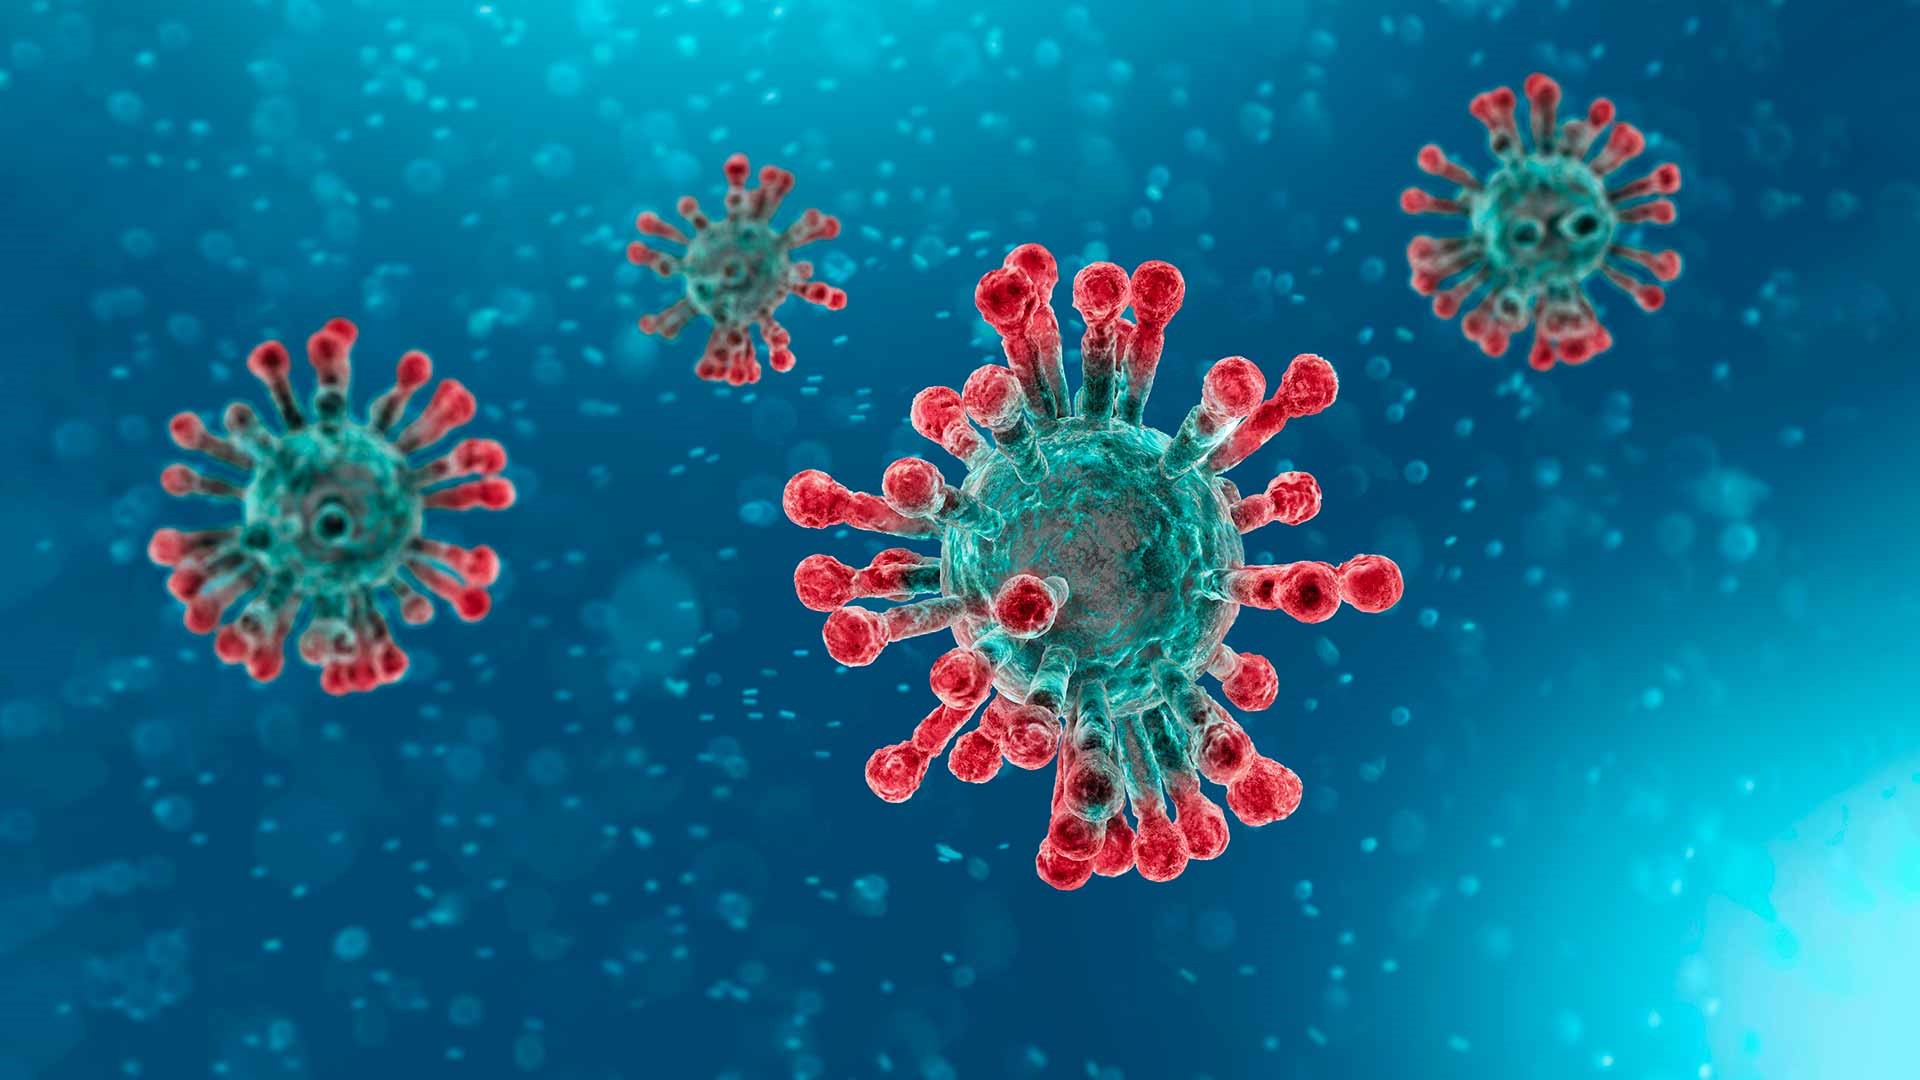 Buscan a científicos mexicanos para encontrar cura al coronavirus